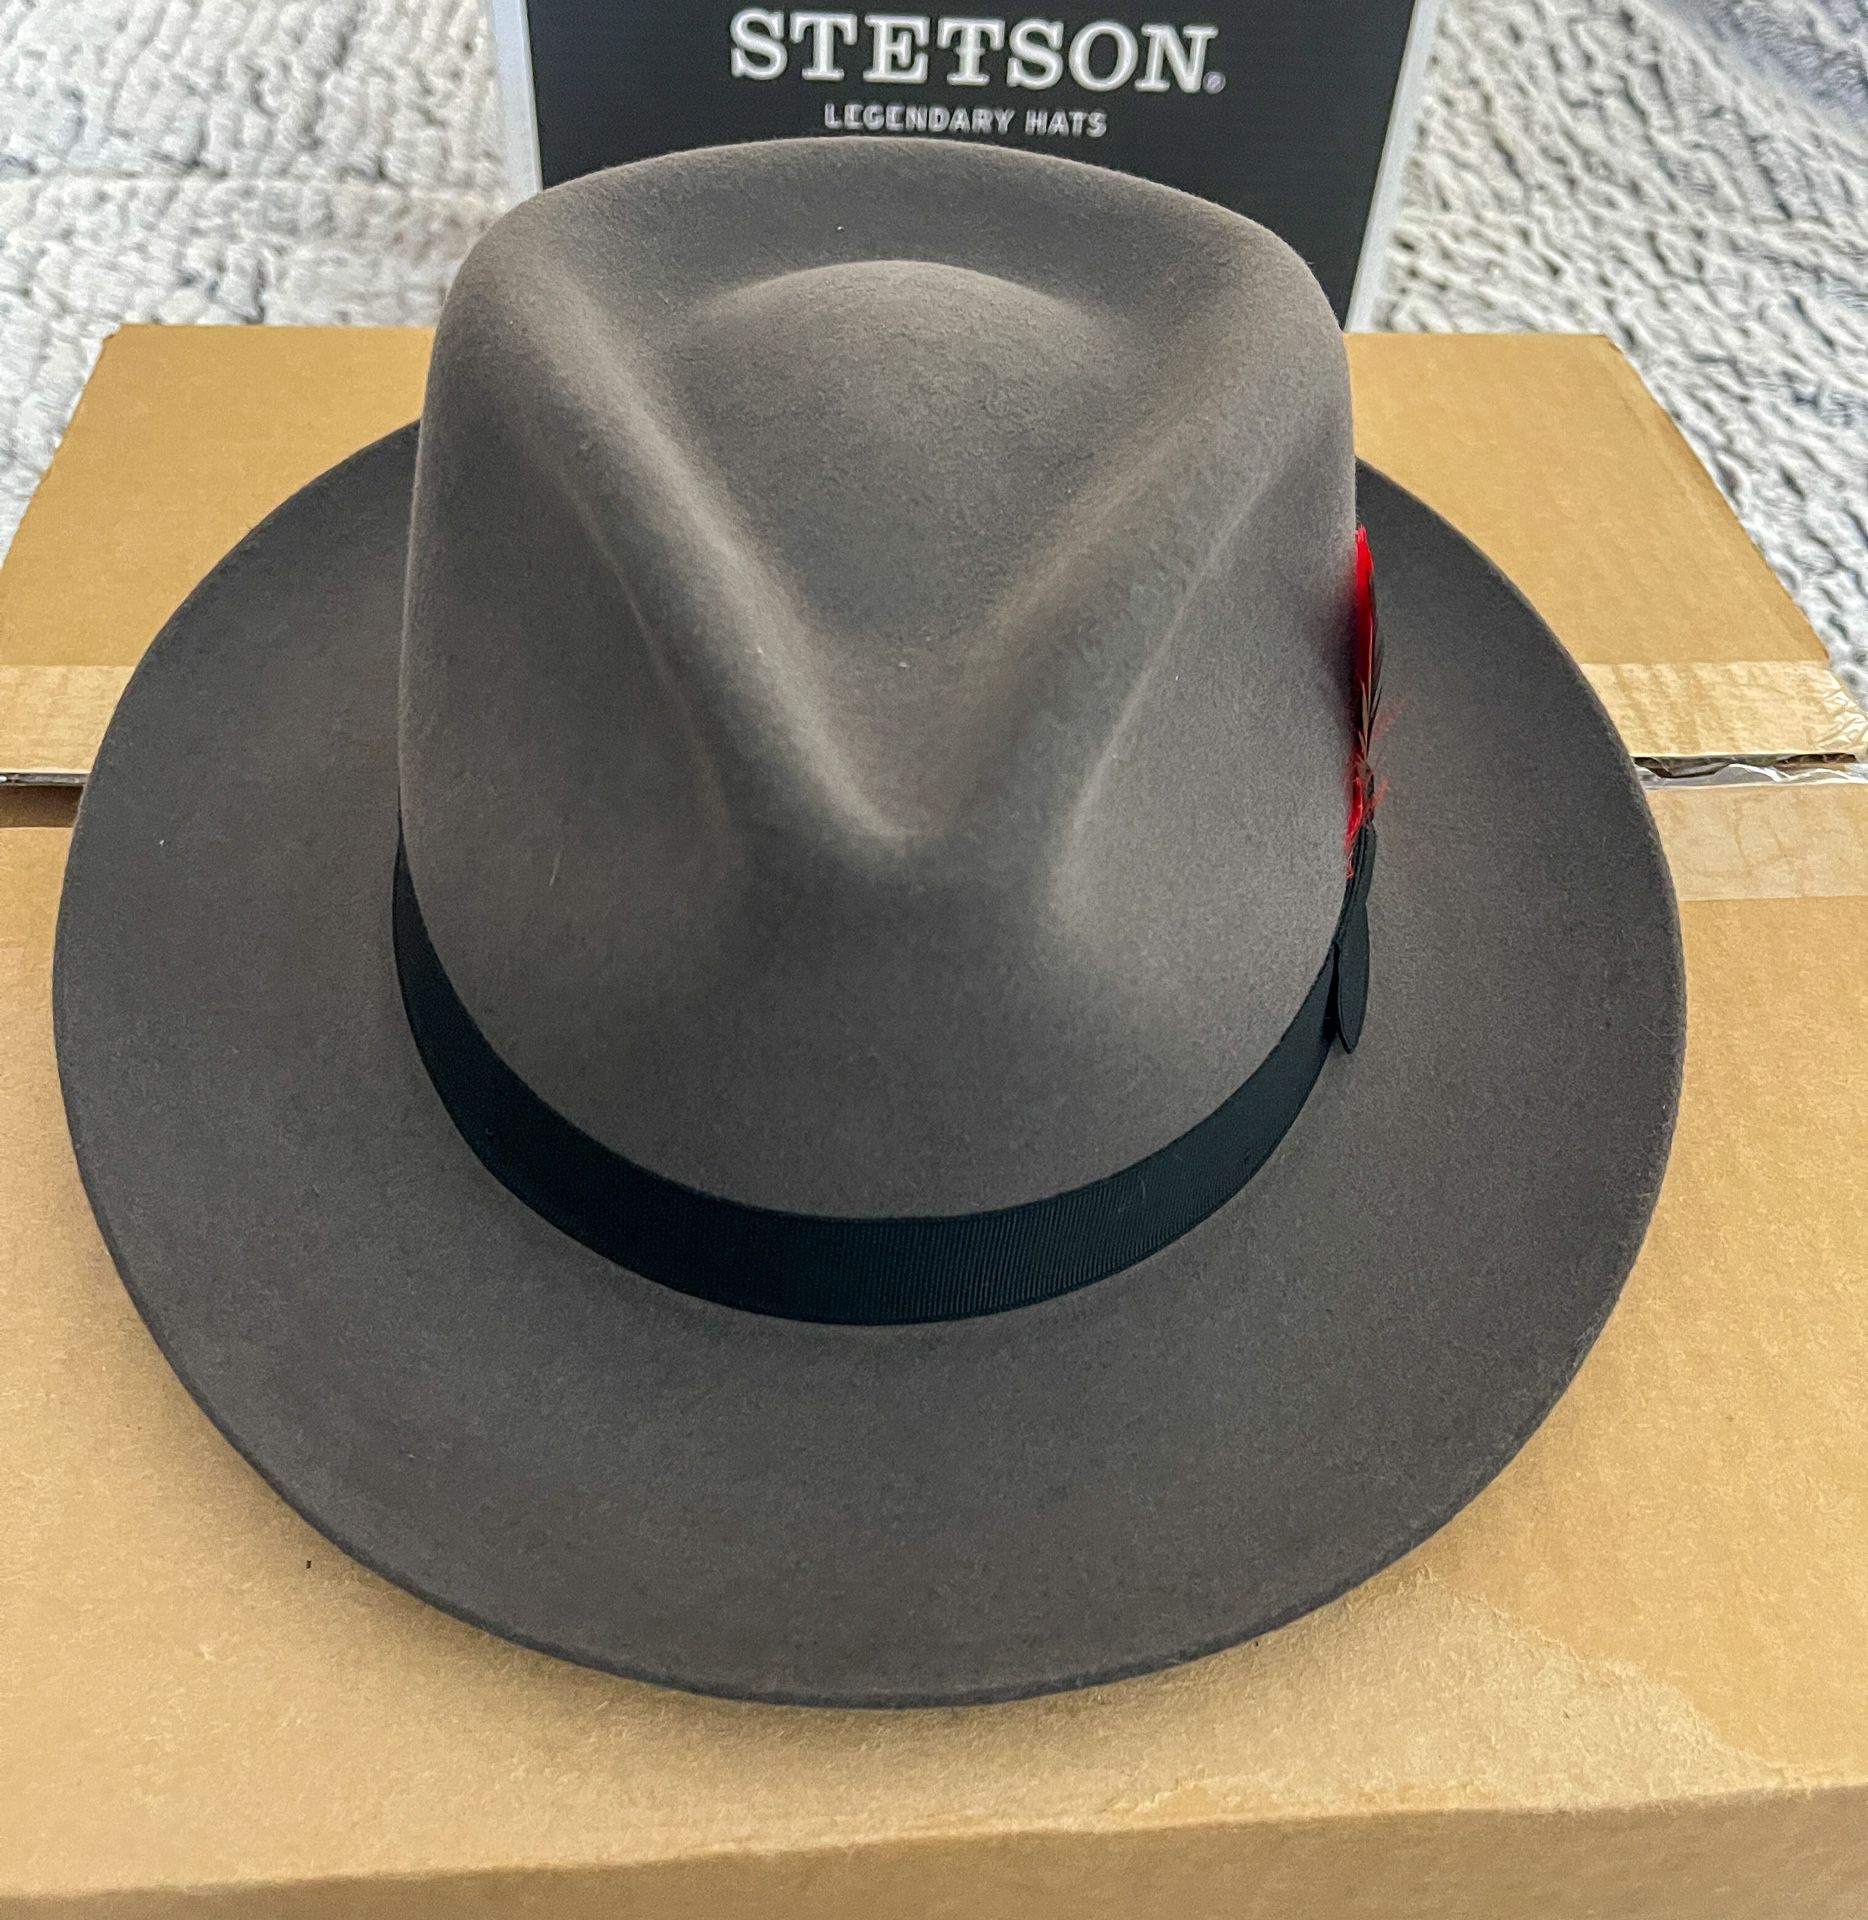 STETSON ROYAL FEDORA HAT - Color: Caribou (gray), Size: 57